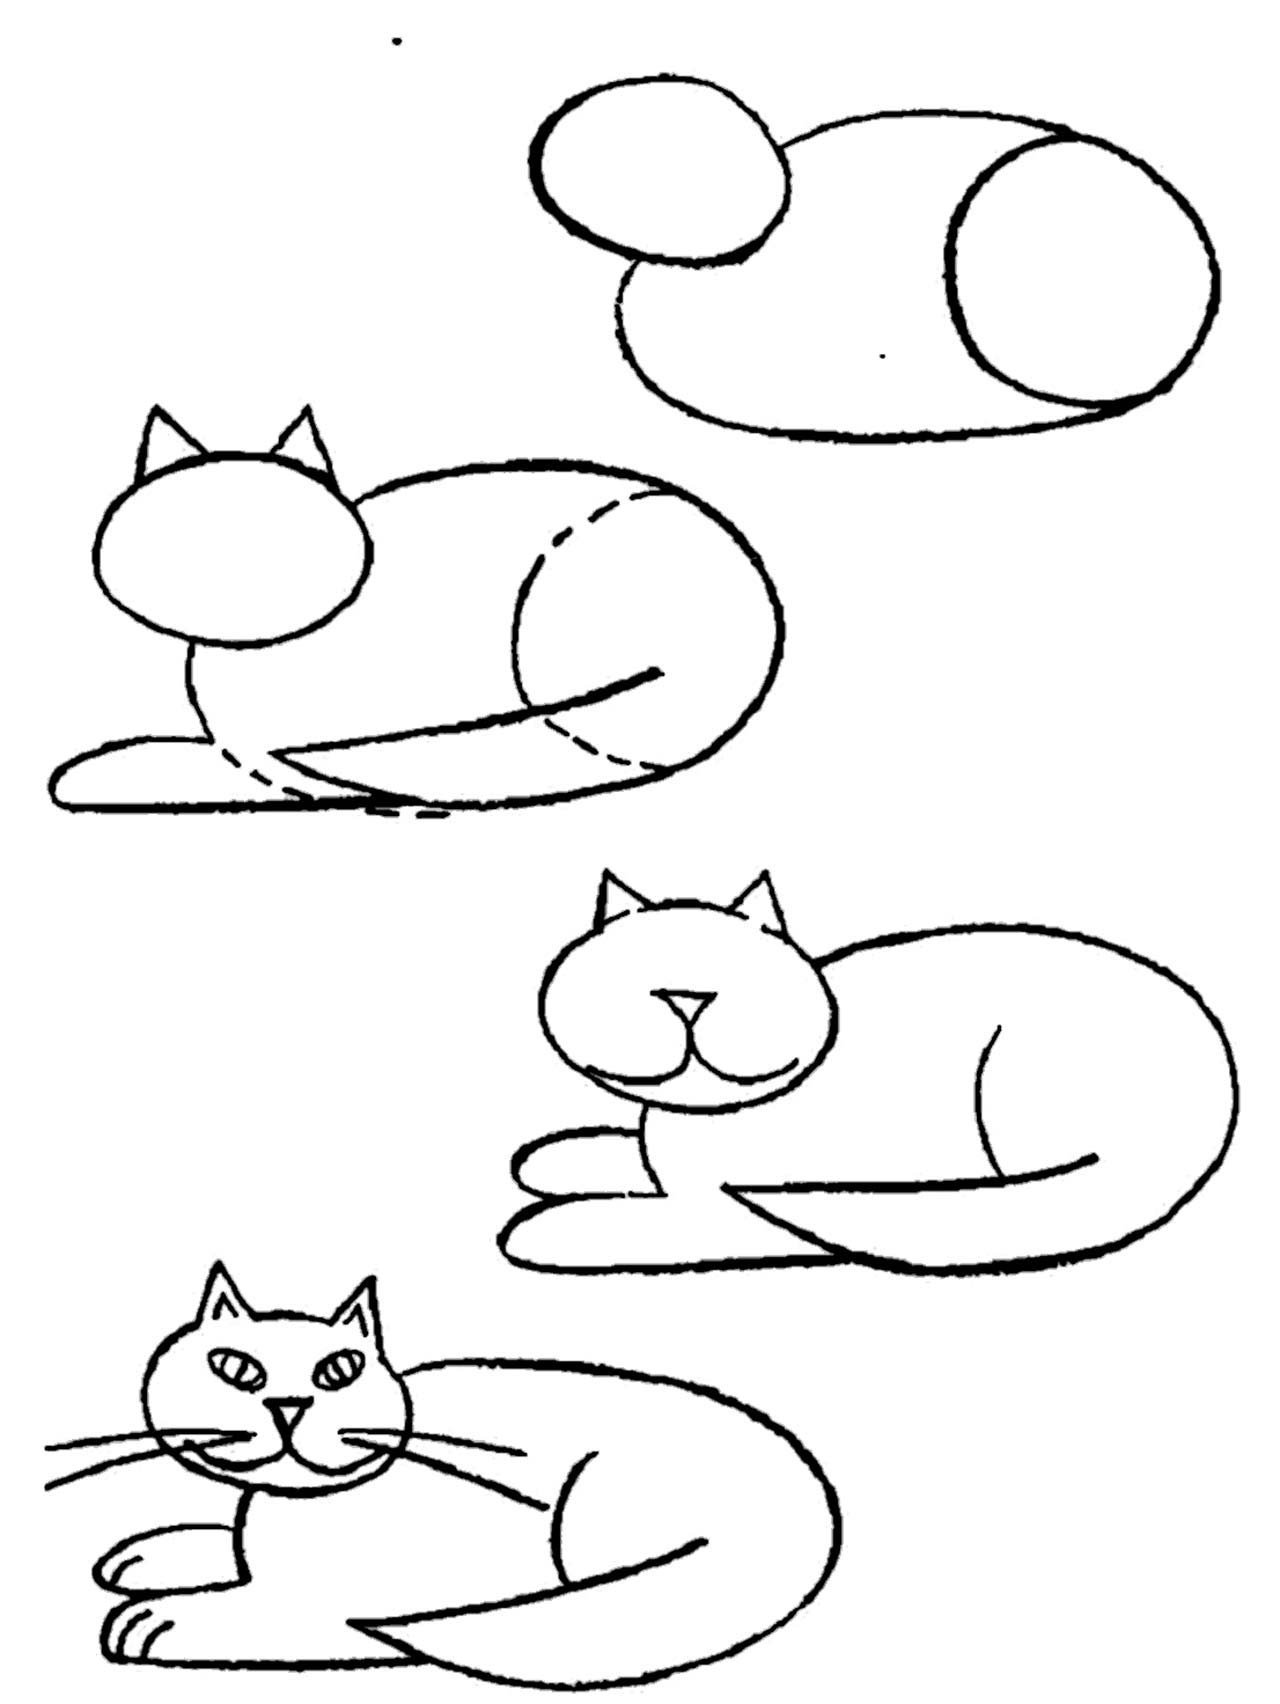 картинки котят для начинающих